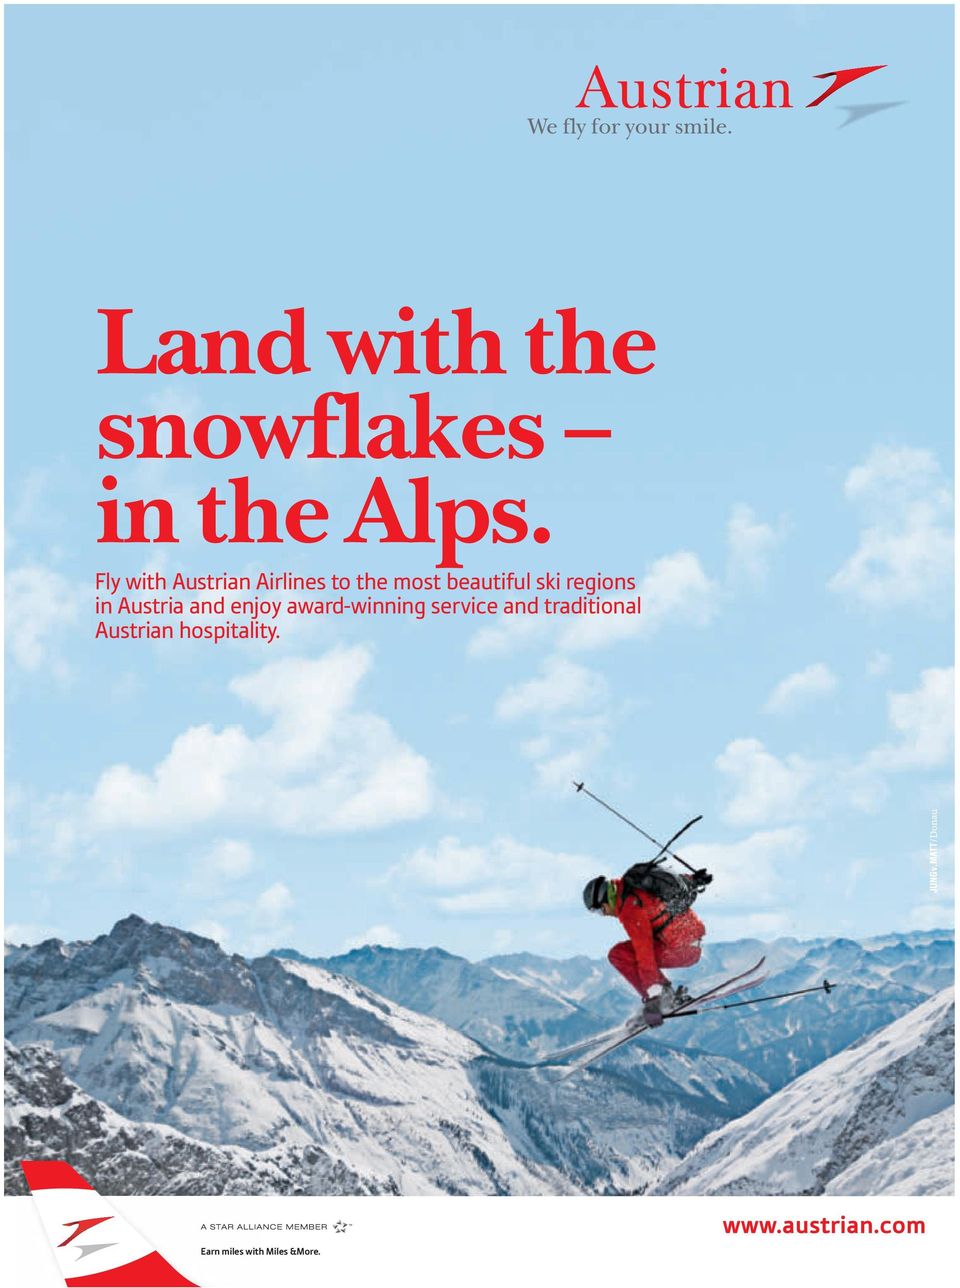 ski regions in Austria and enjoy award-winning